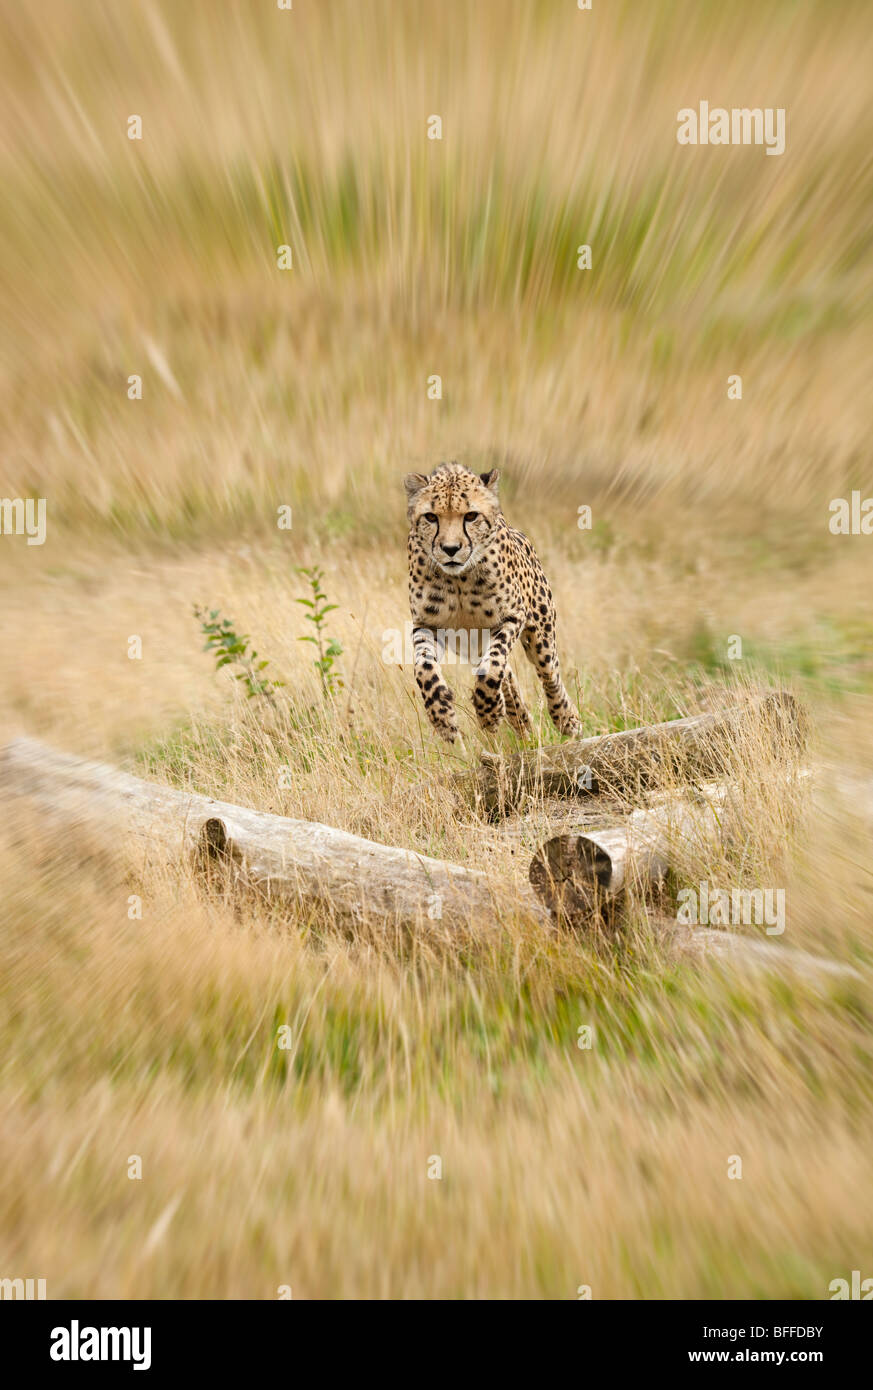 Cheetah jumping running animal hi-res stock photography and images - Alamy